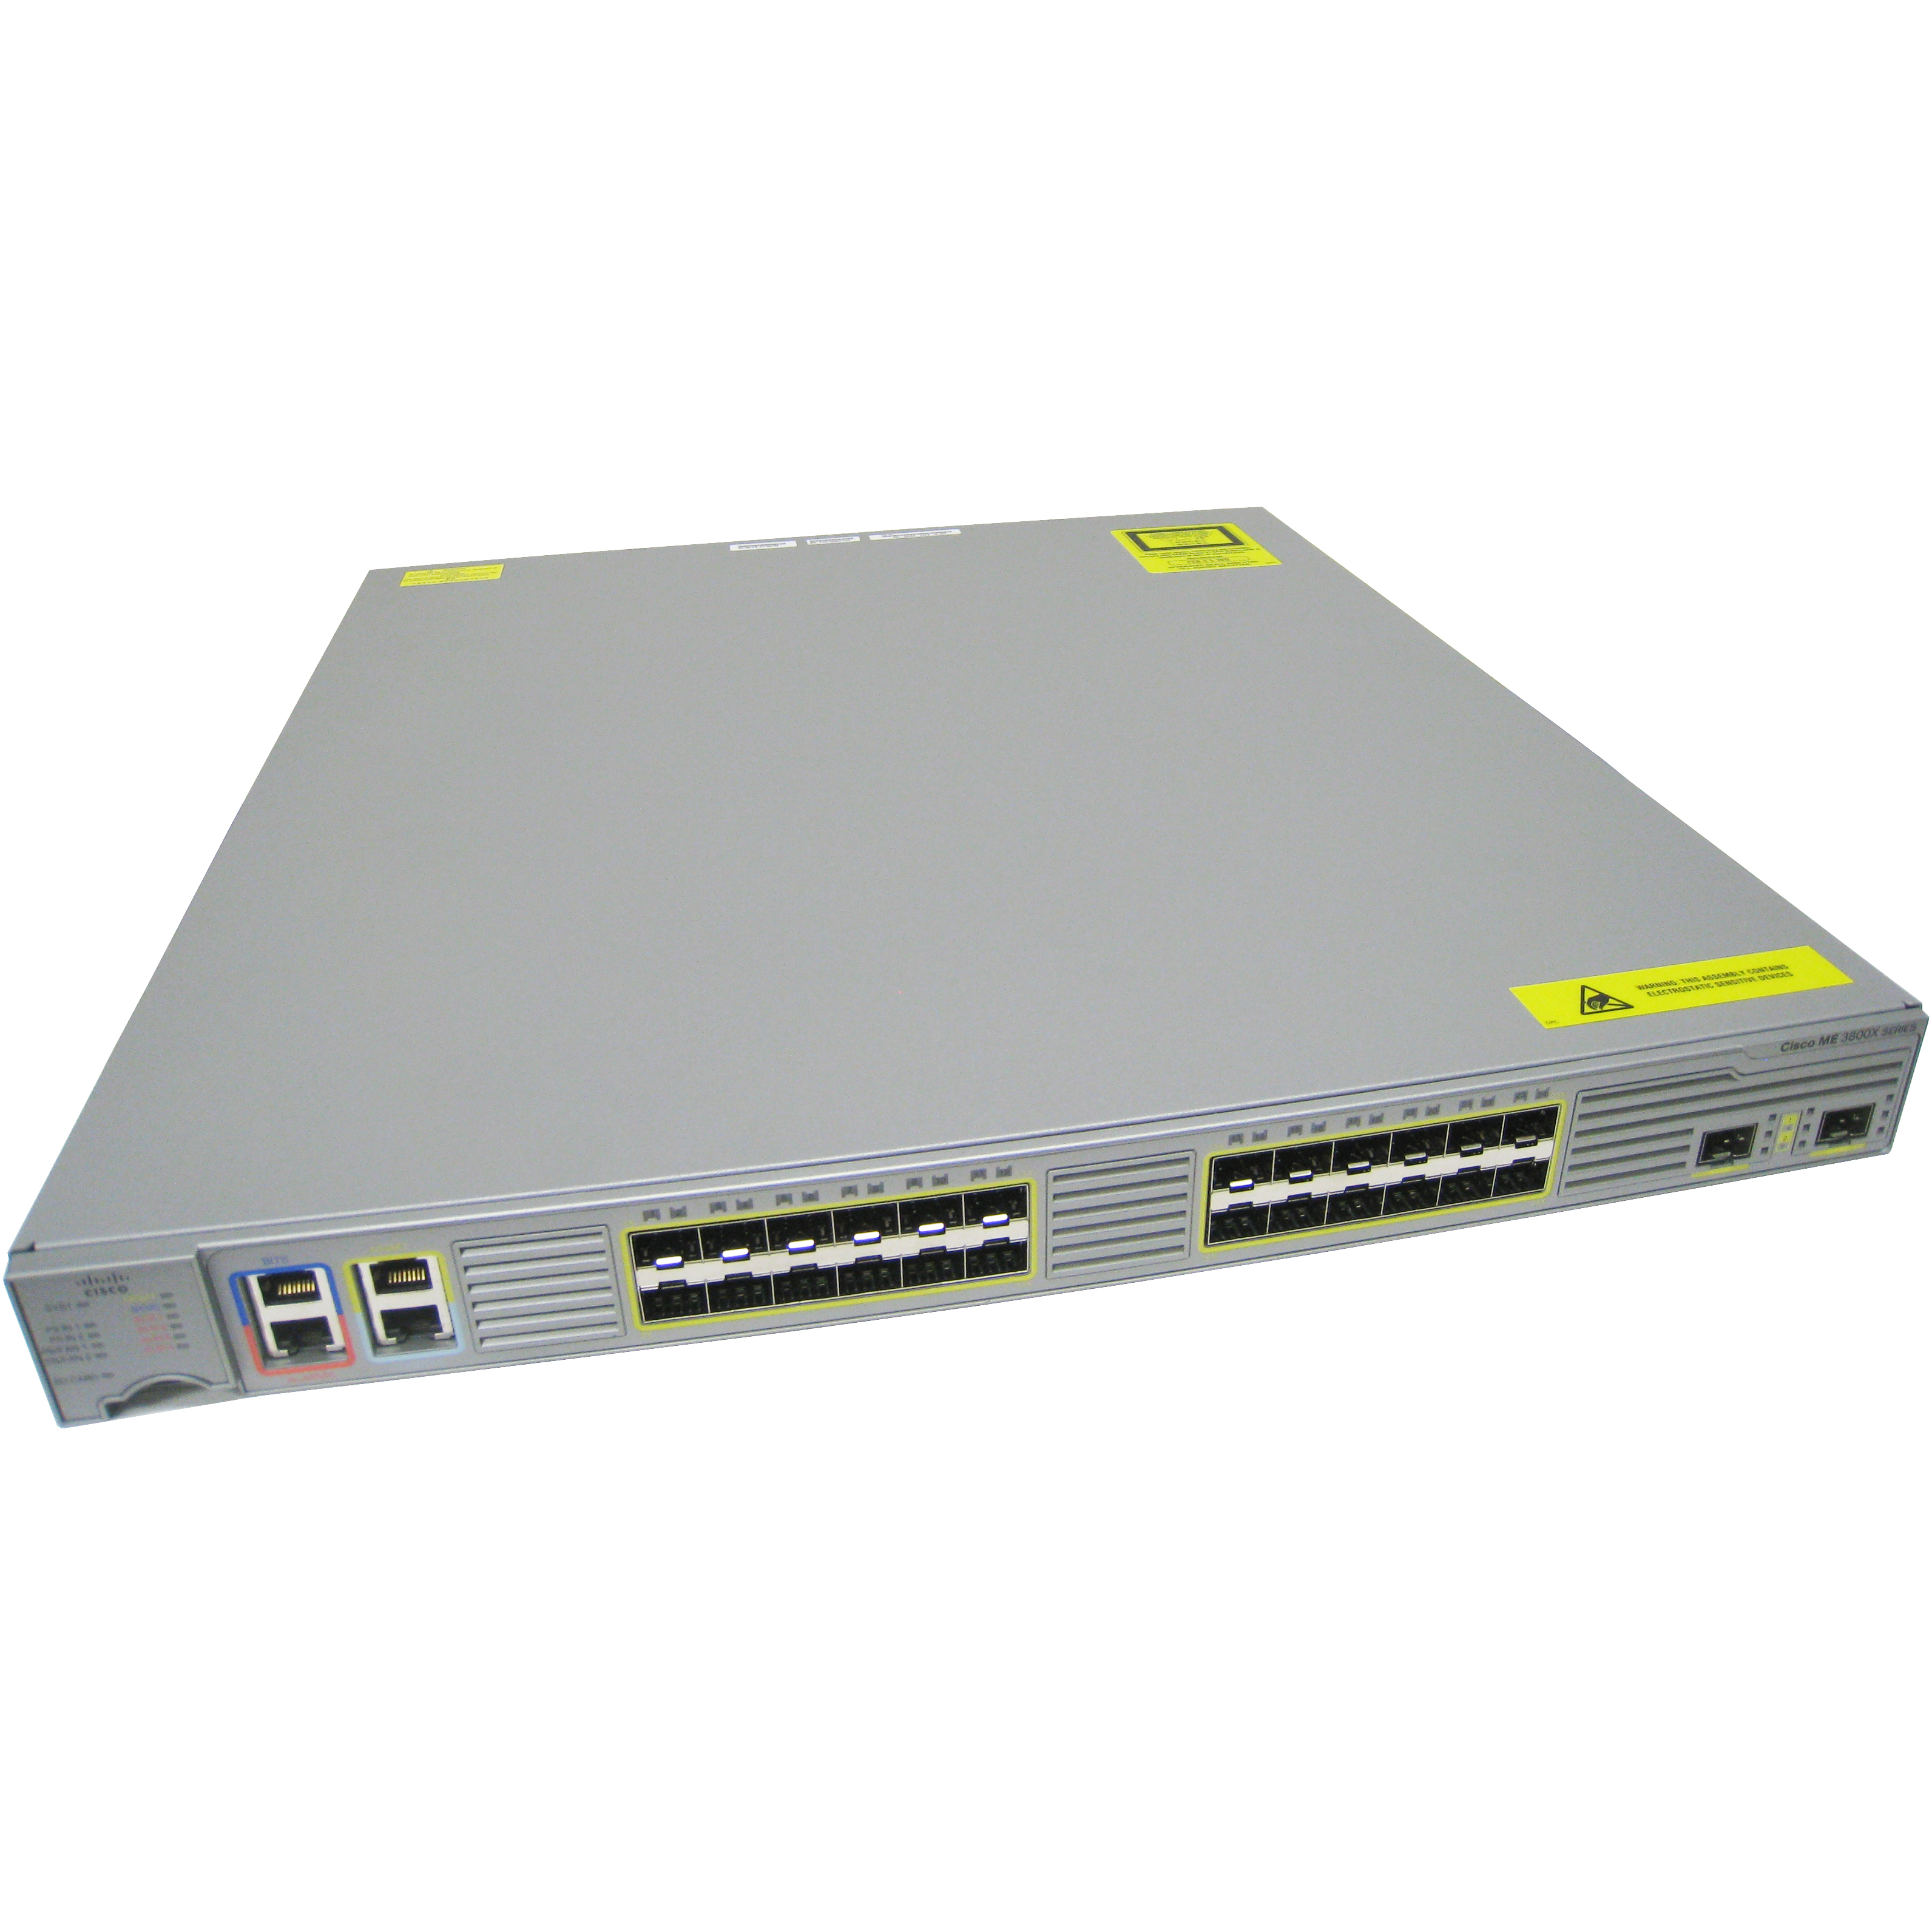 Cisco ME-3800X-24FS-M